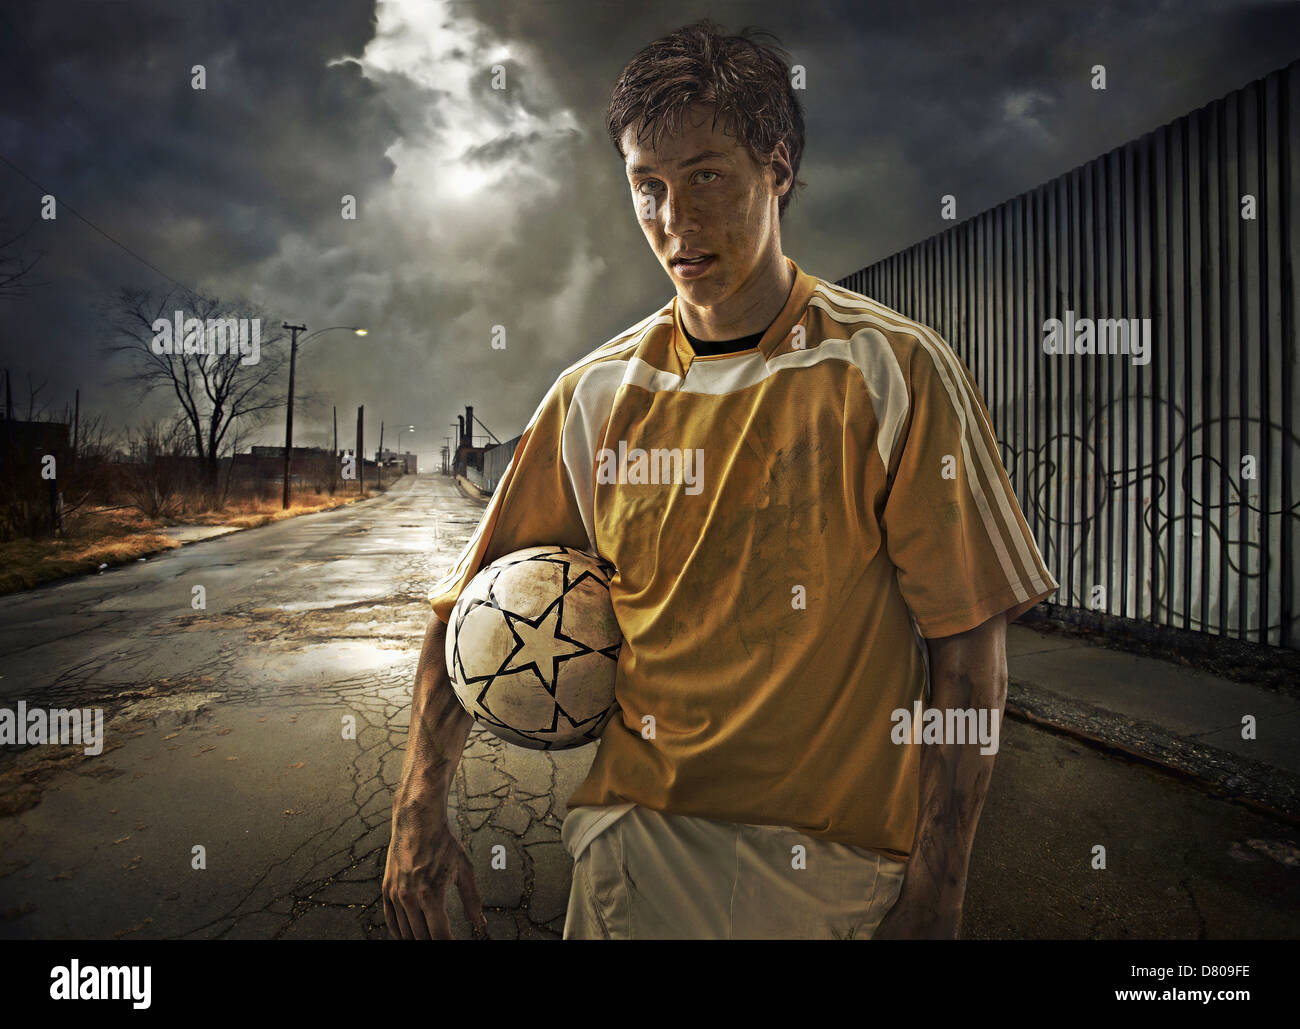 Illustration de soccer player holding ball on city street Banque D'Images